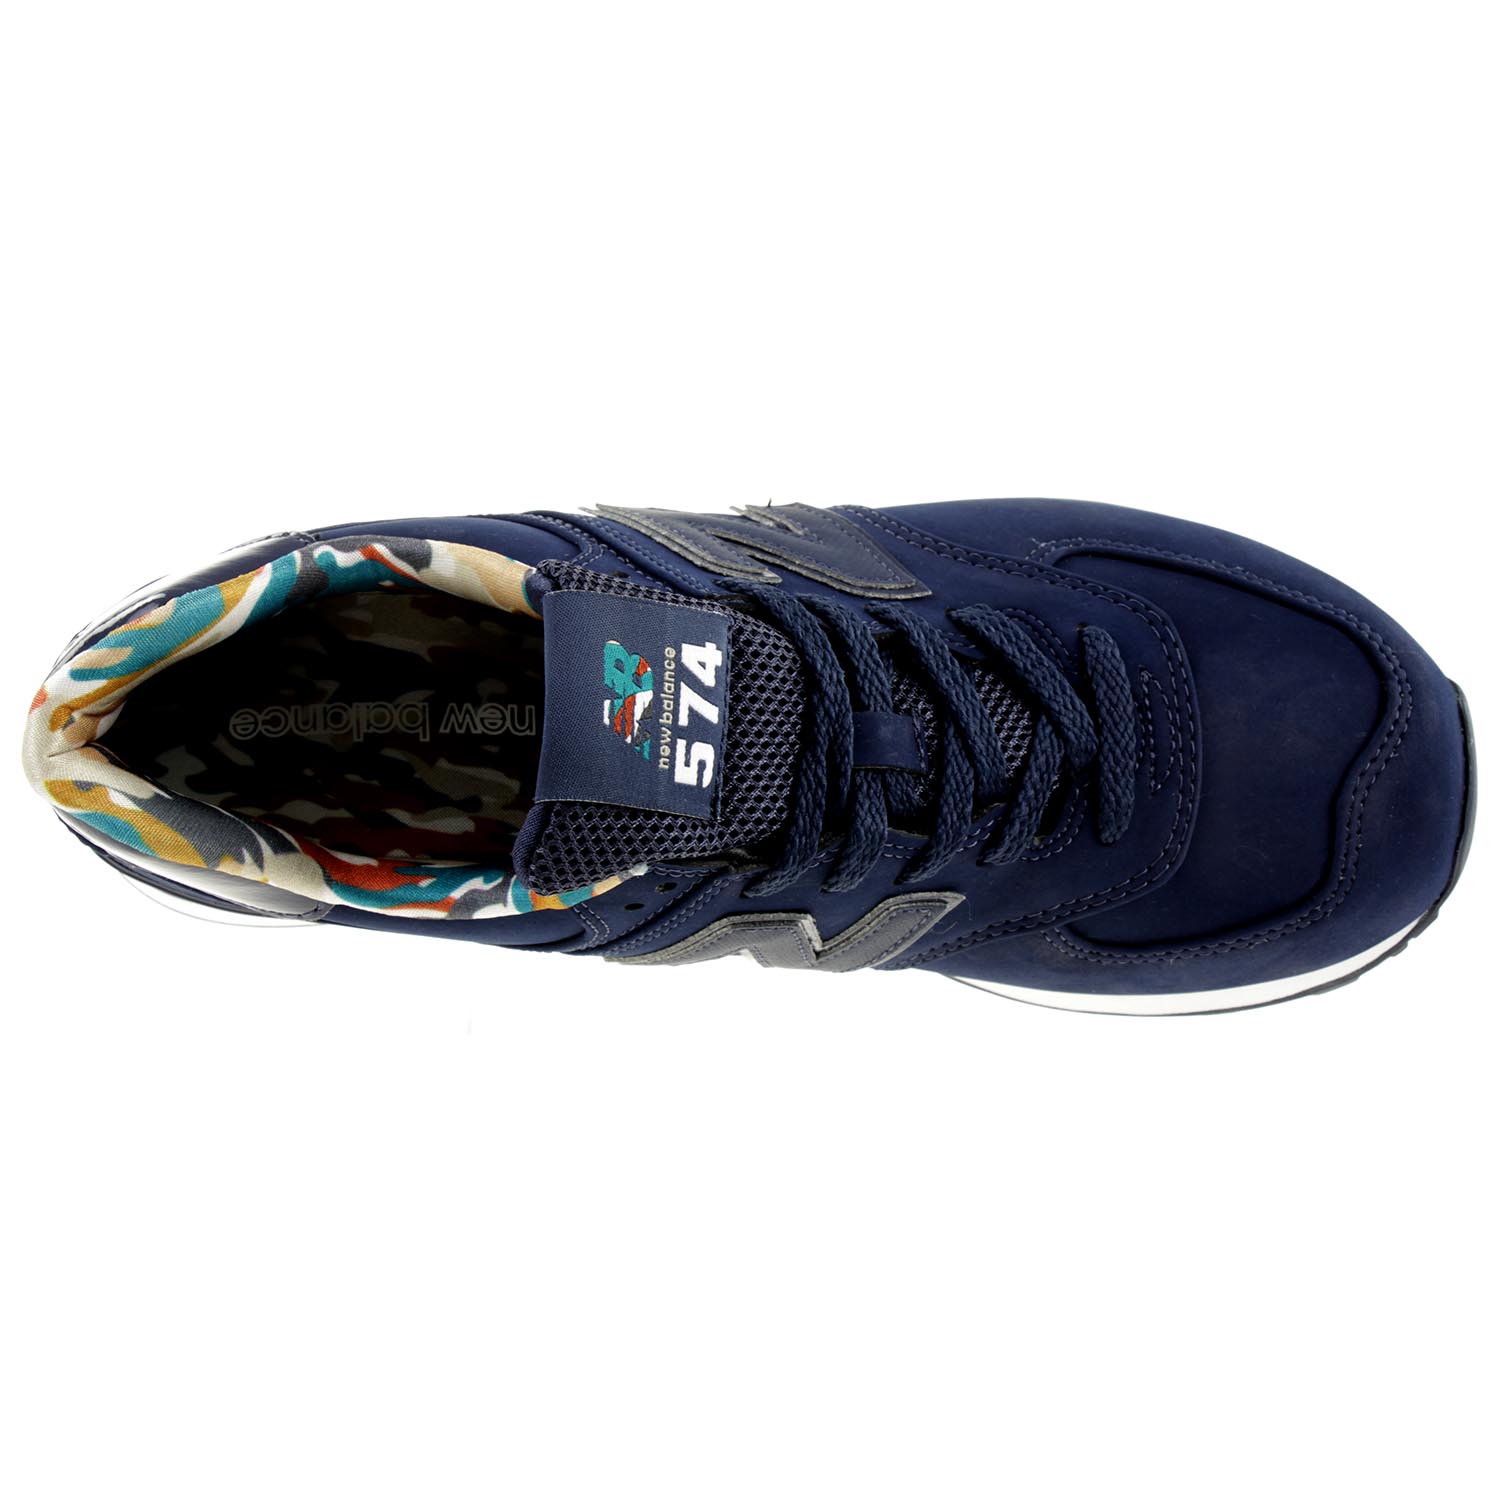 New Balance ML 574 GYZ Classic Sneaker Herren Schuhe blau